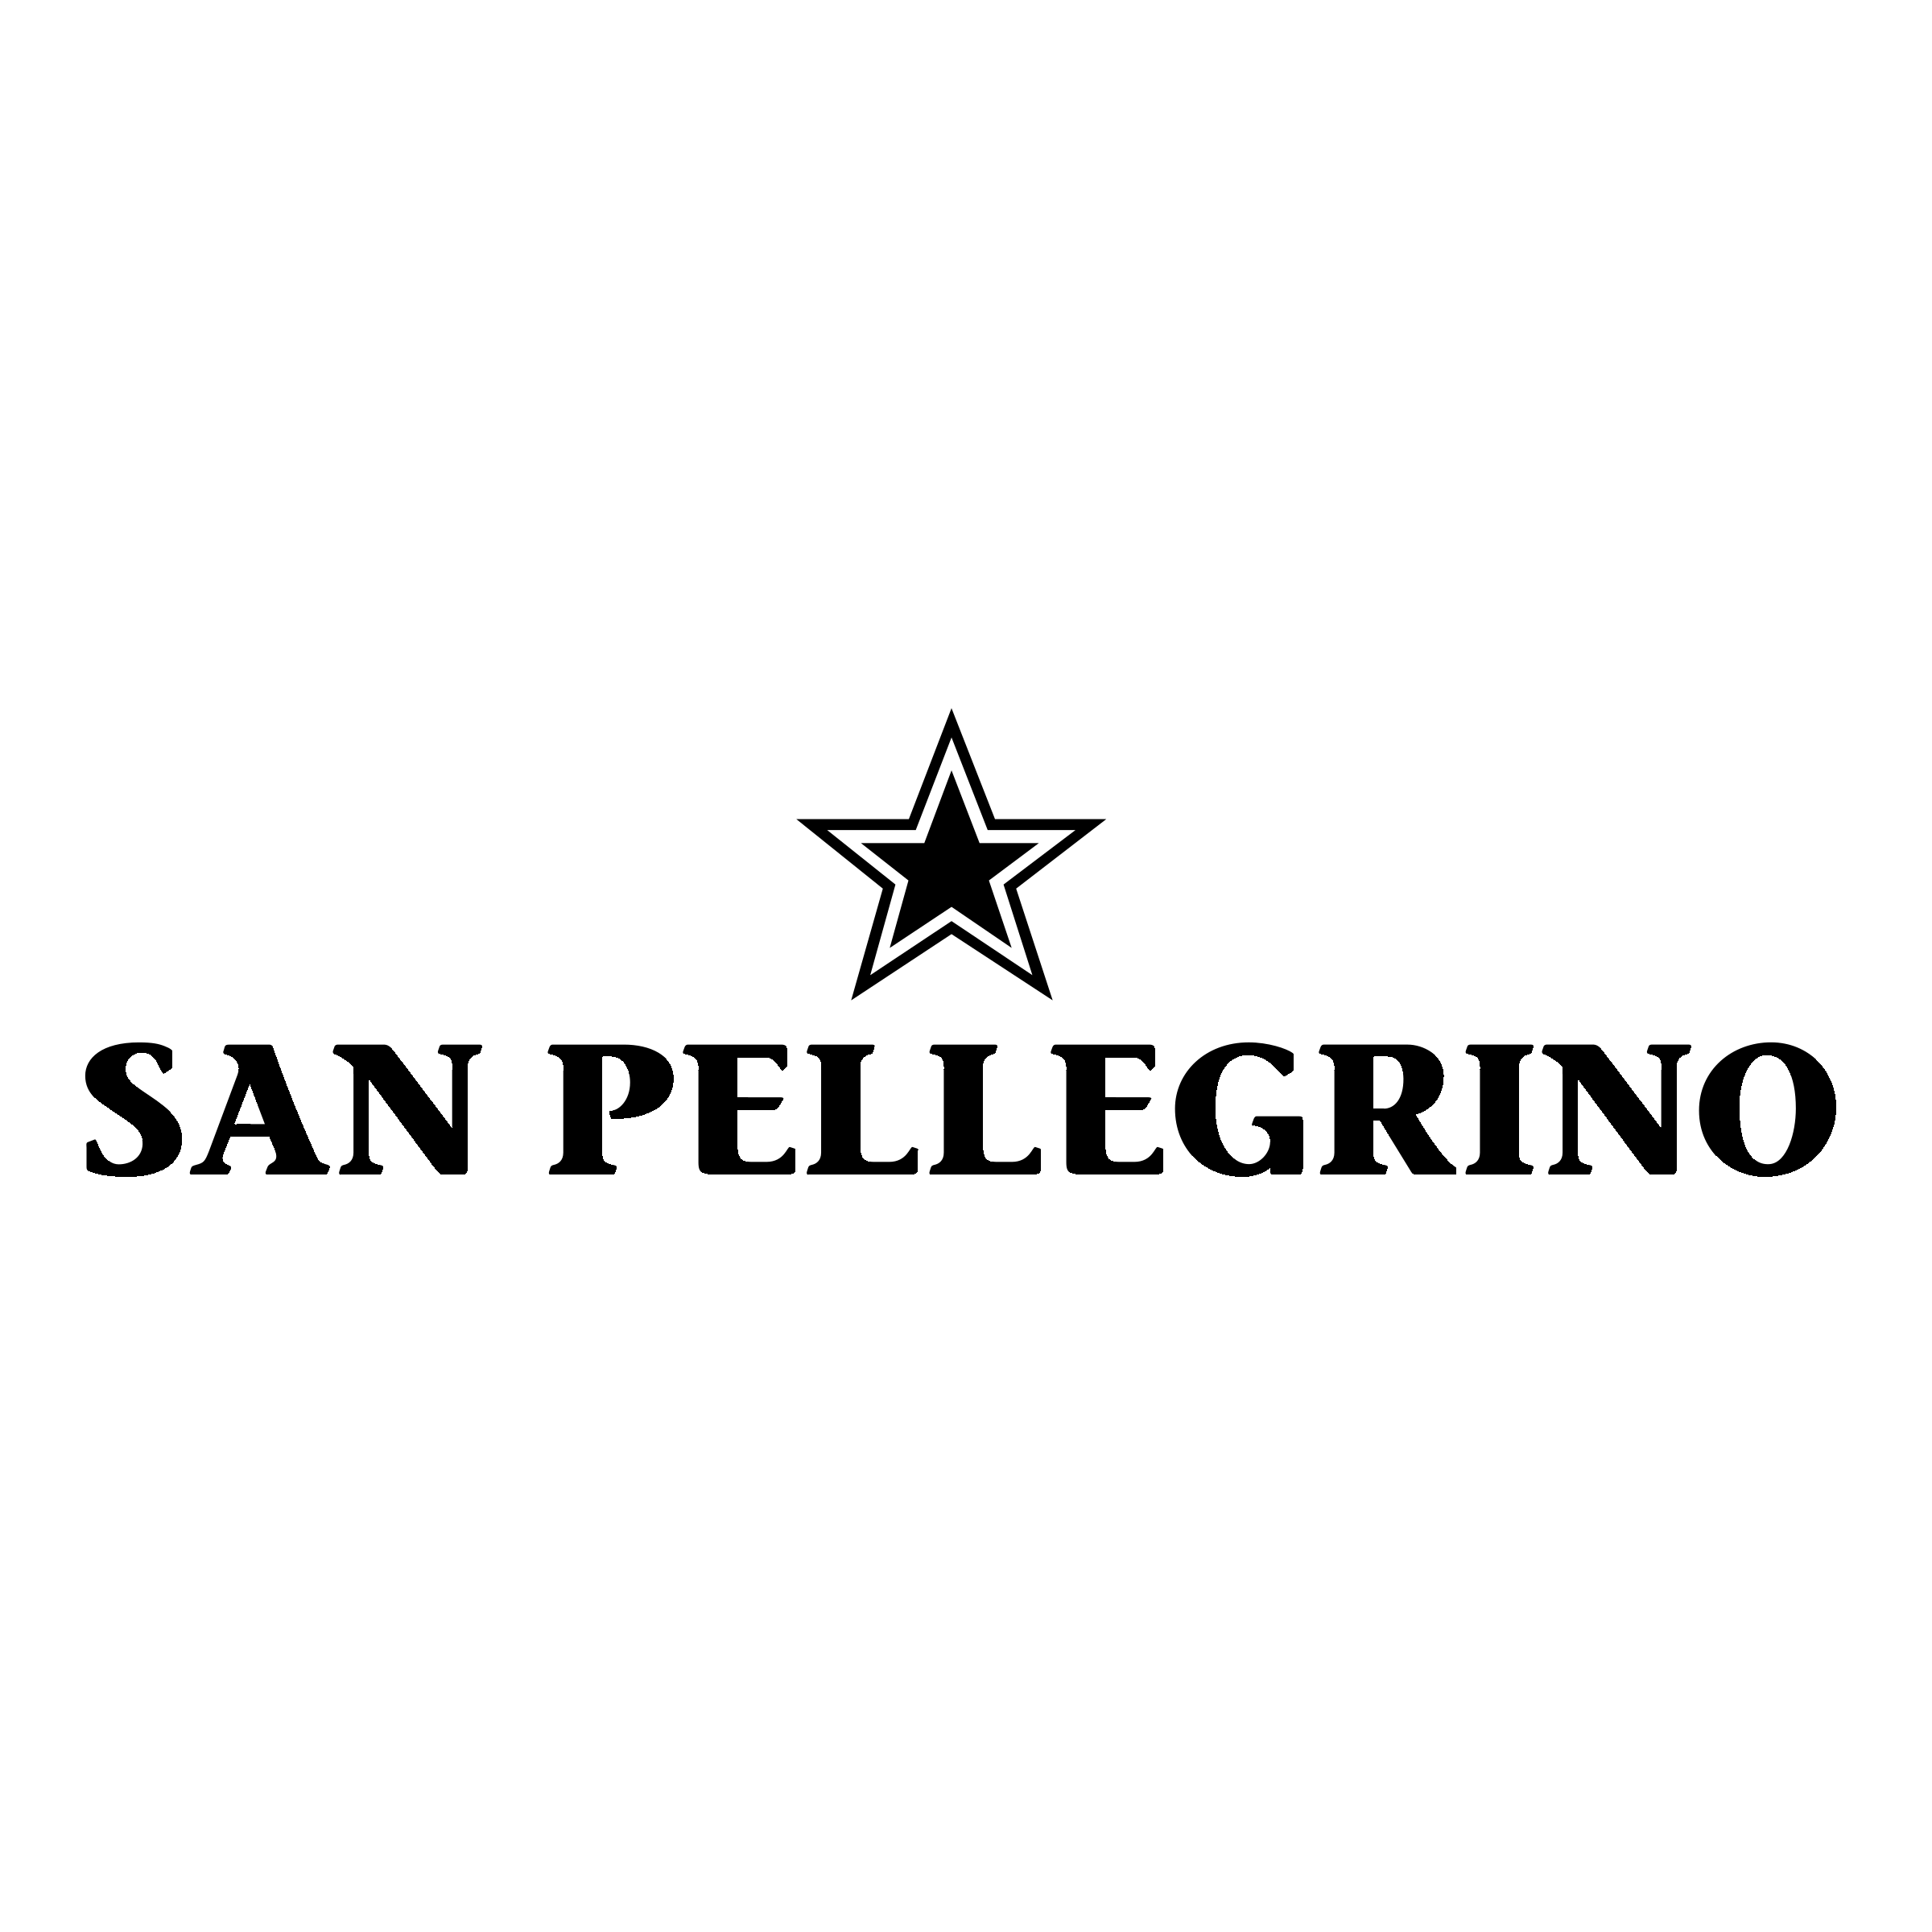 sanpellegrino-3-logo-black-and-white.png